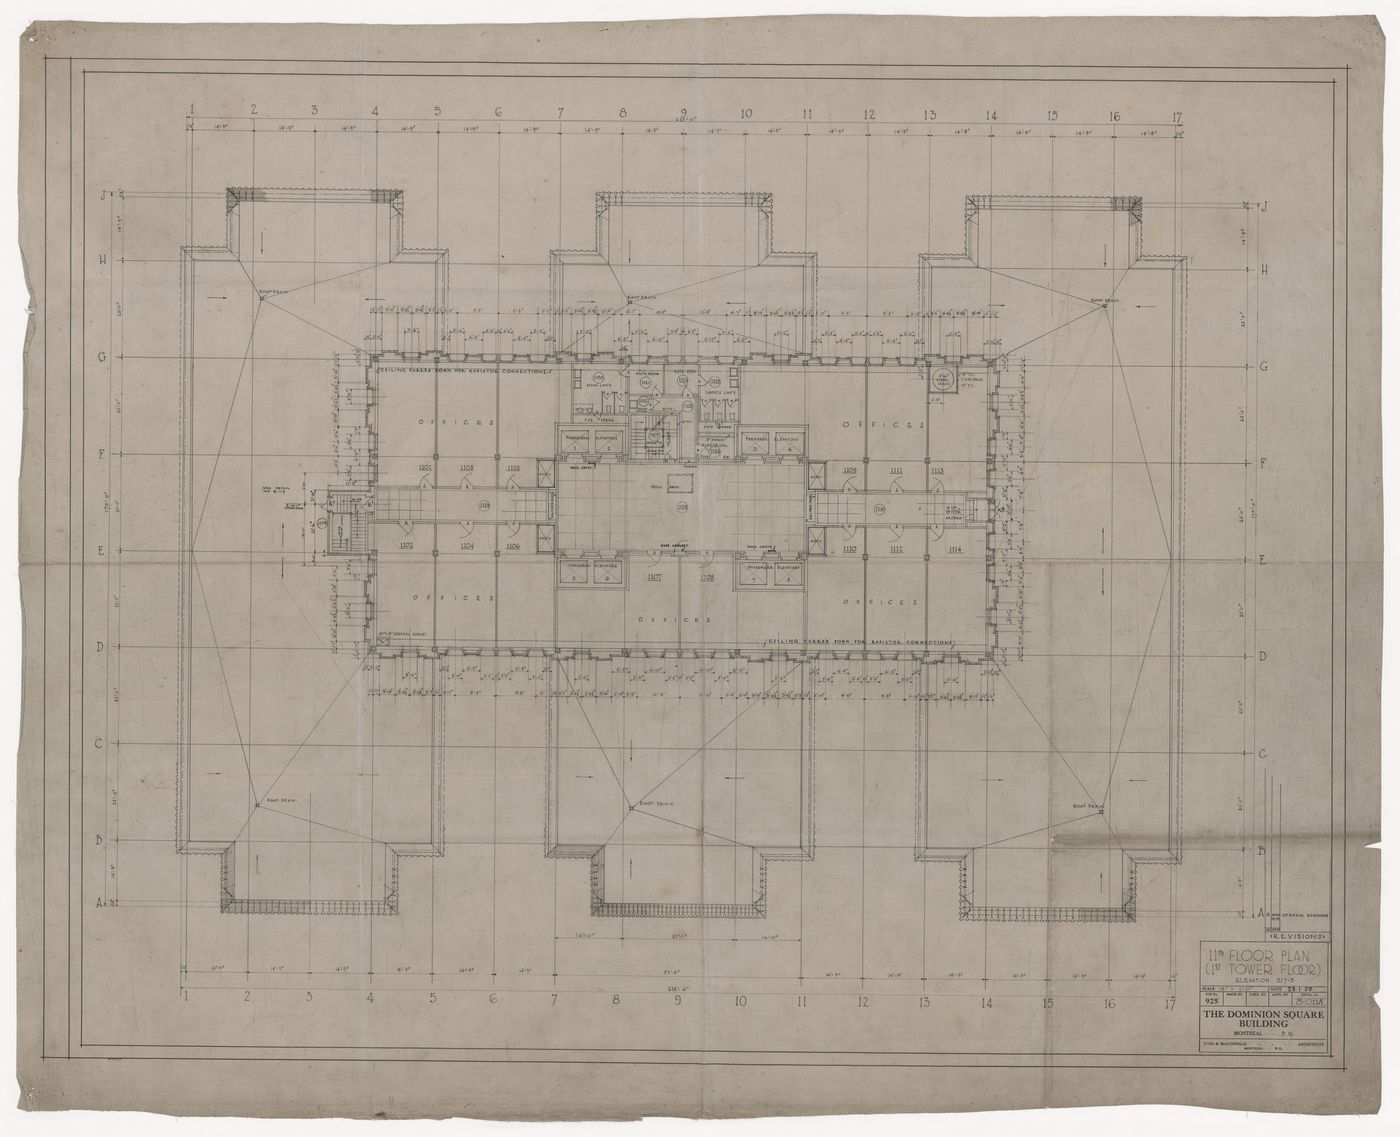 Floor plan for Dominion Square Building, Montreal, Québec